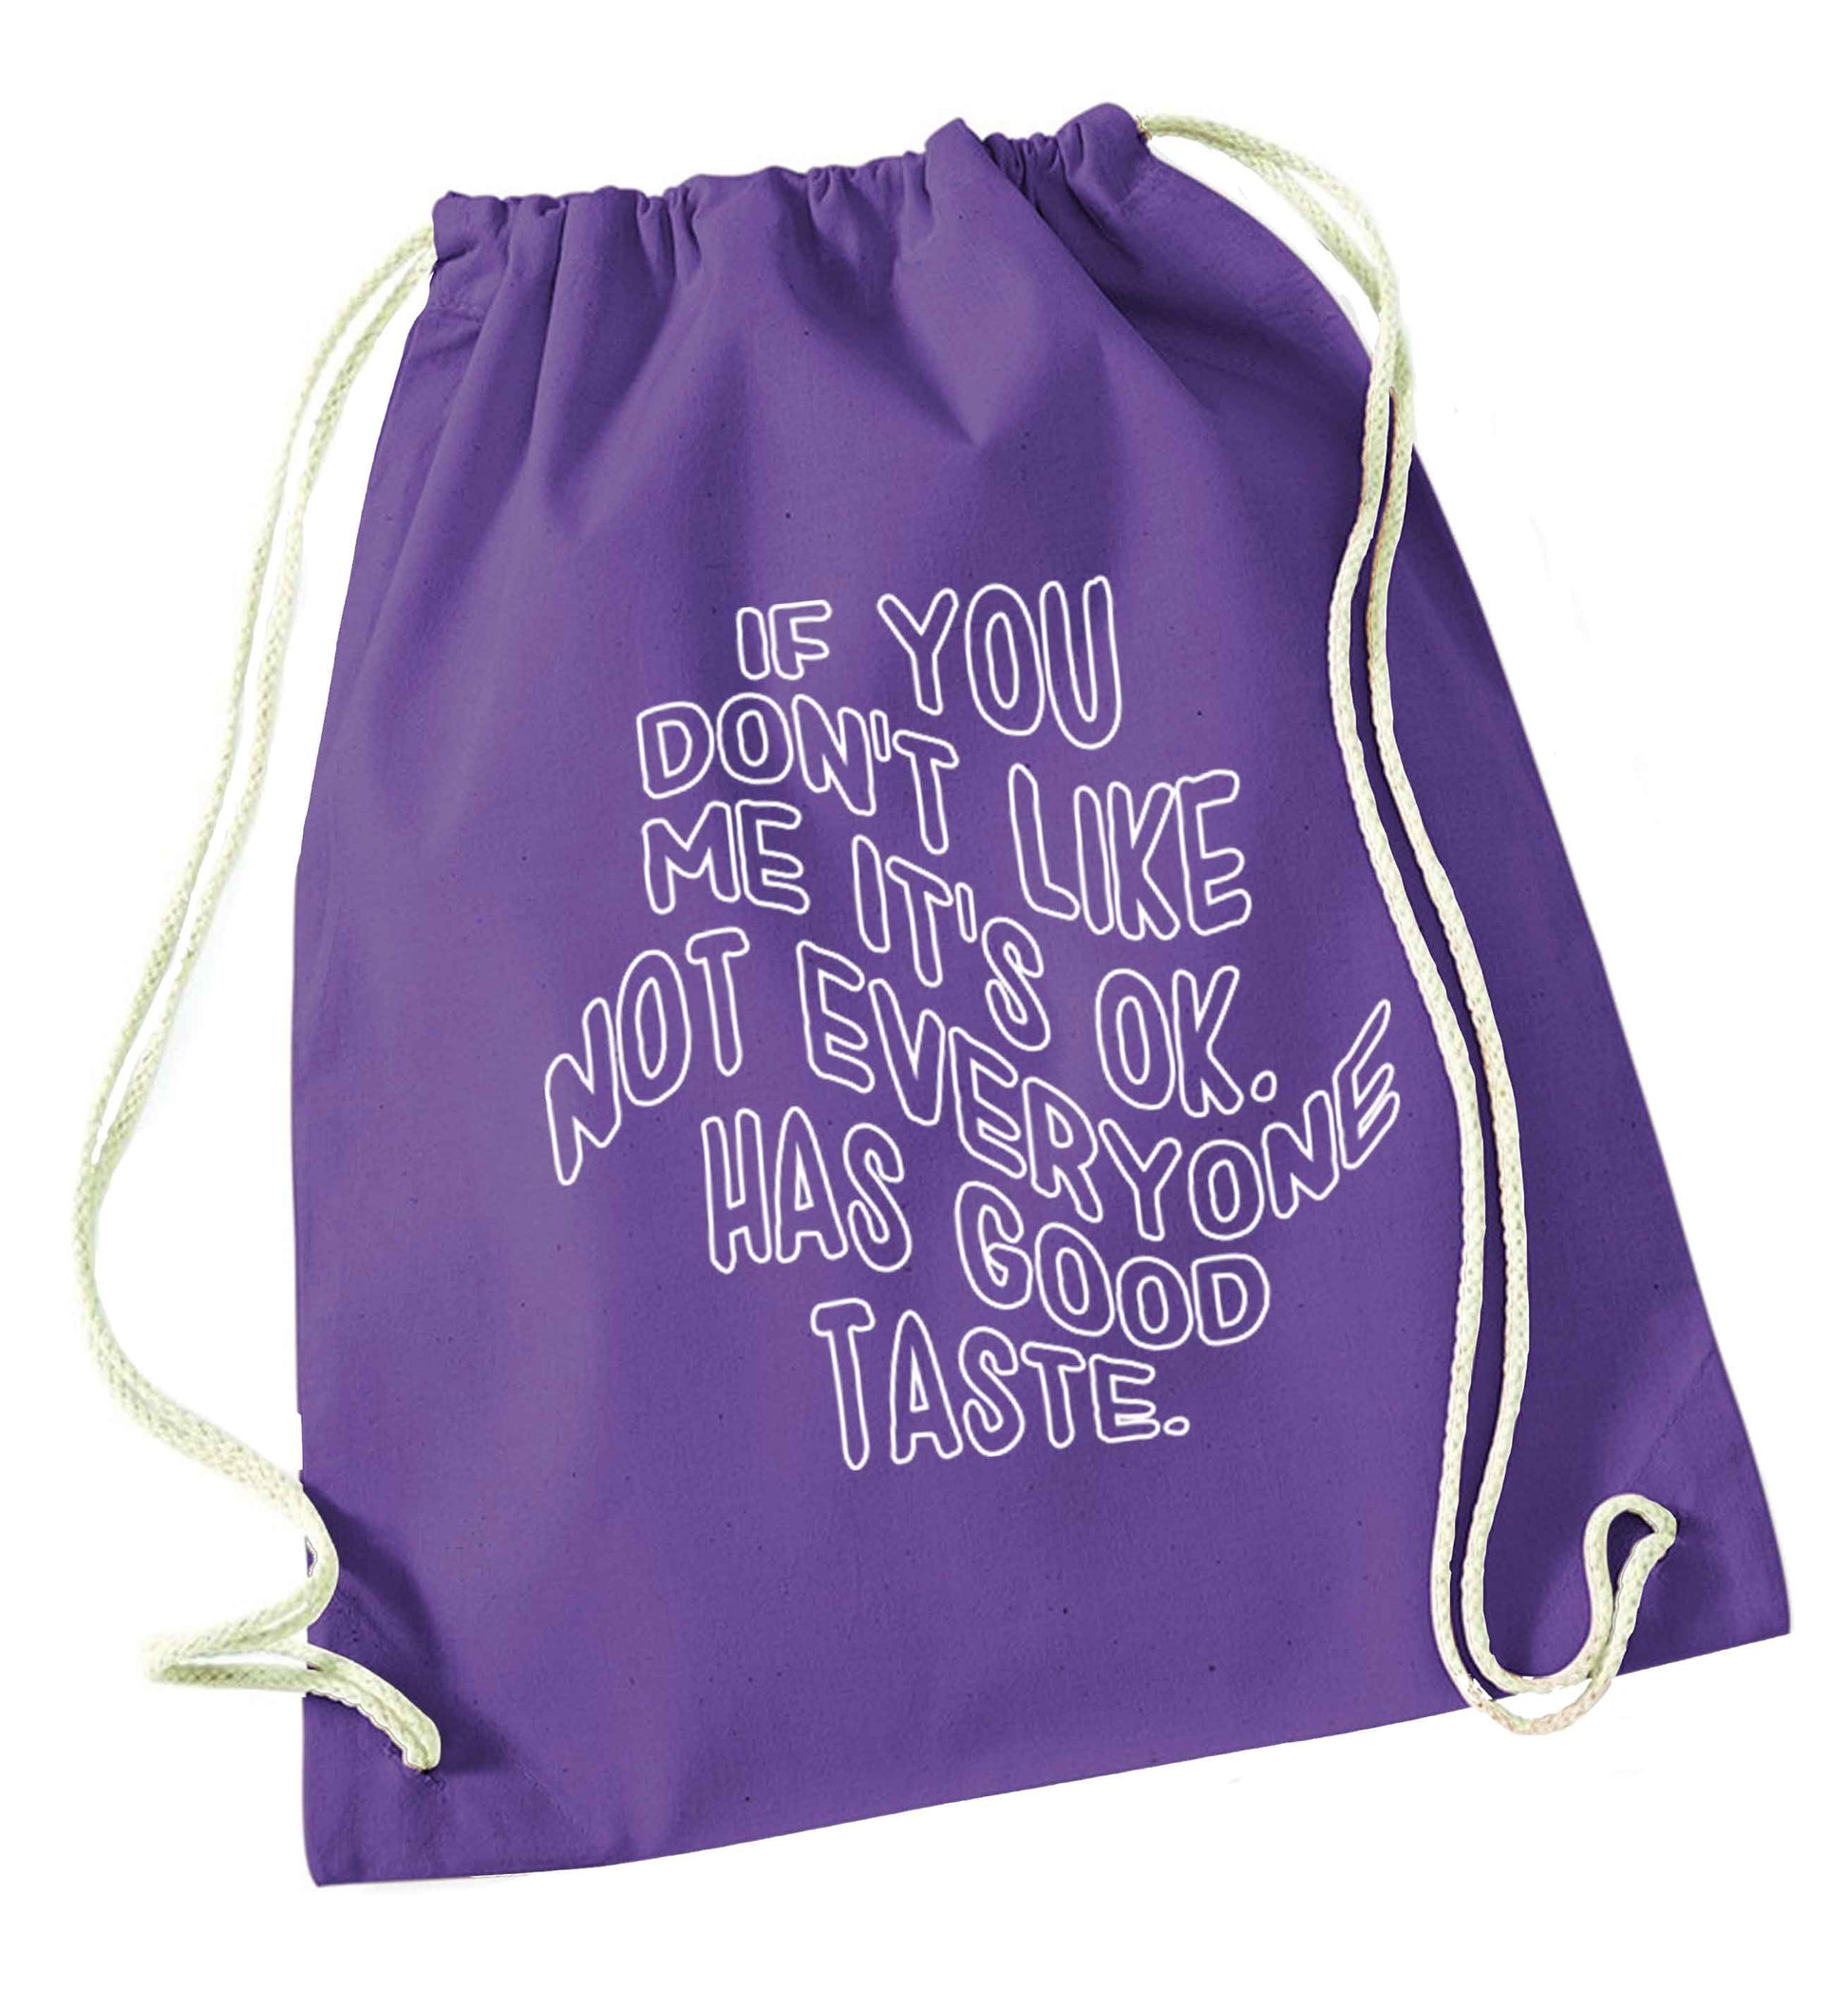 If you don't like me it's ok not everyone has good taste purple drawstring bag